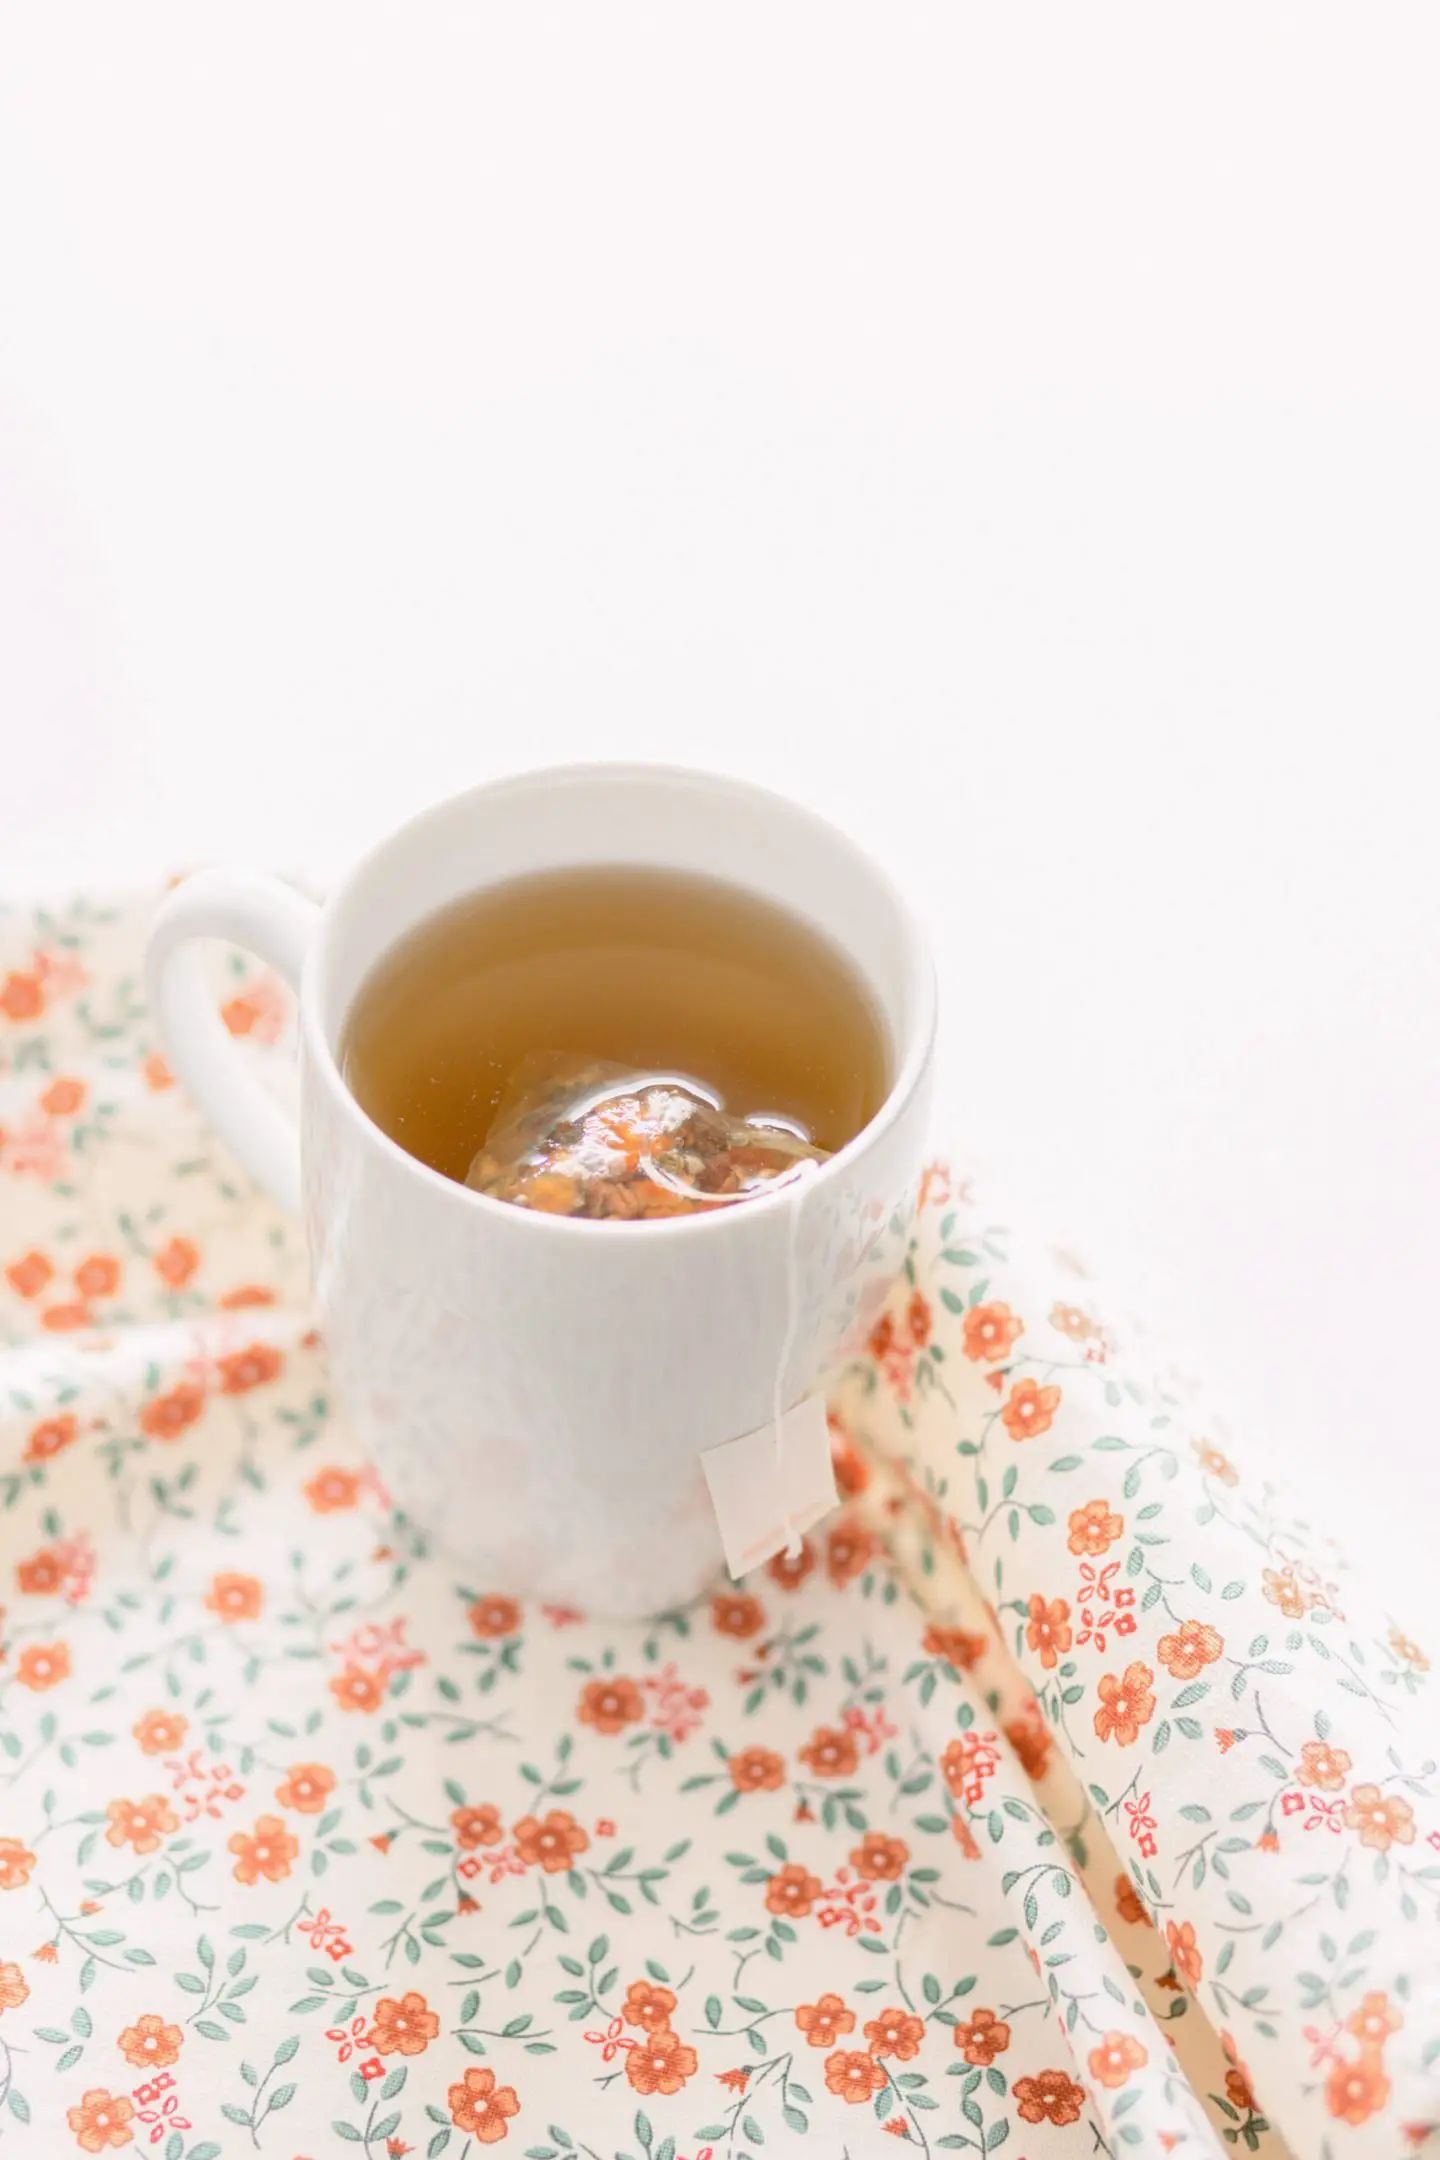 Benefits of Drinking Green Tea